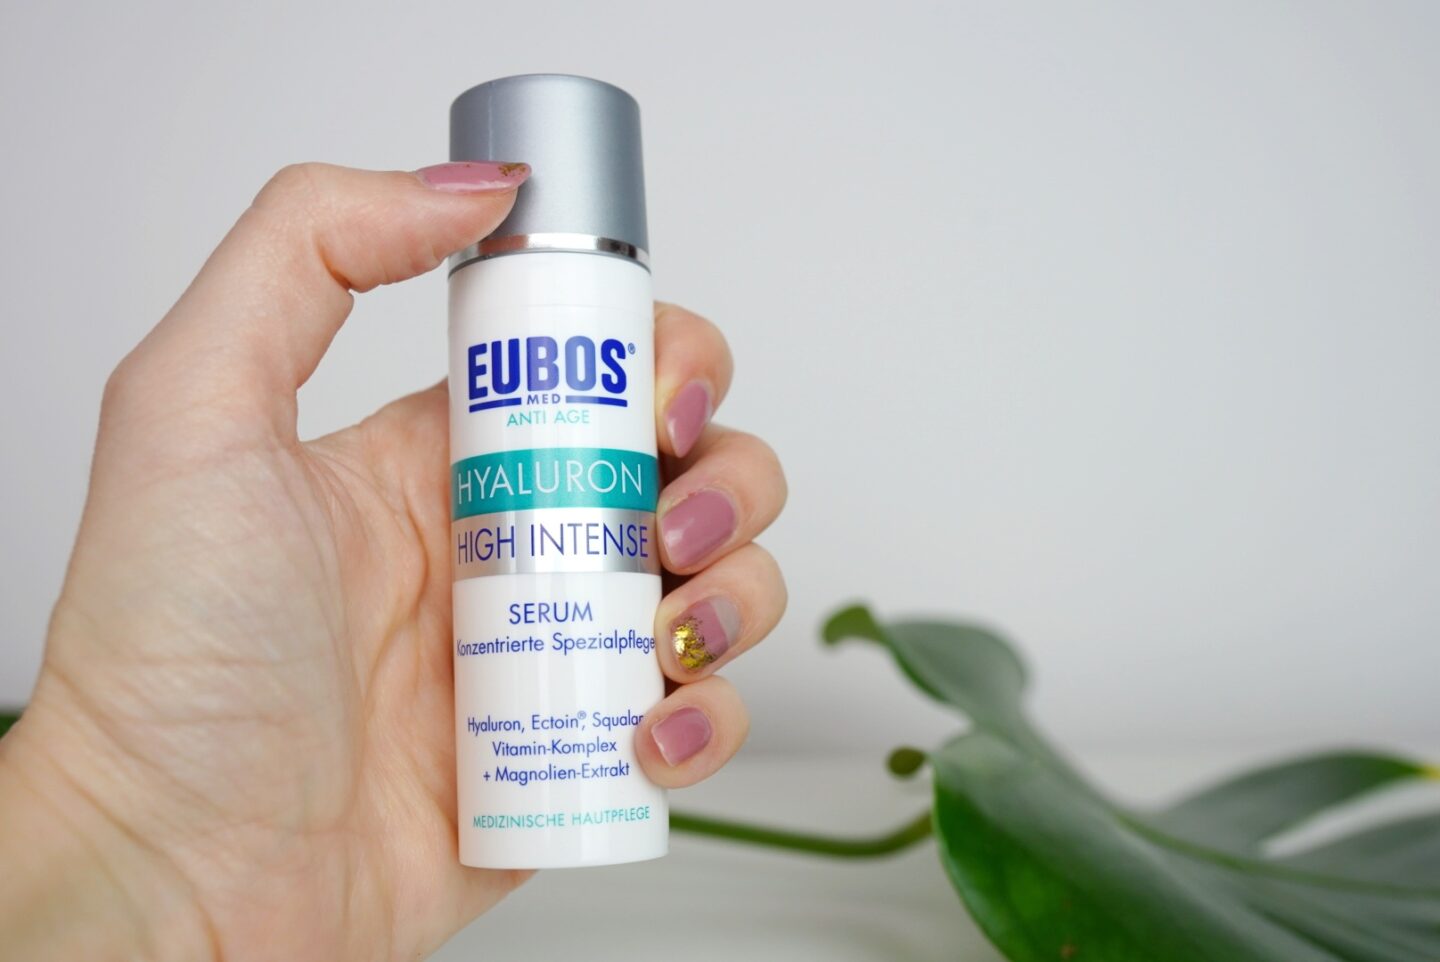 Eubos Hyaluron antiage high intense sérum